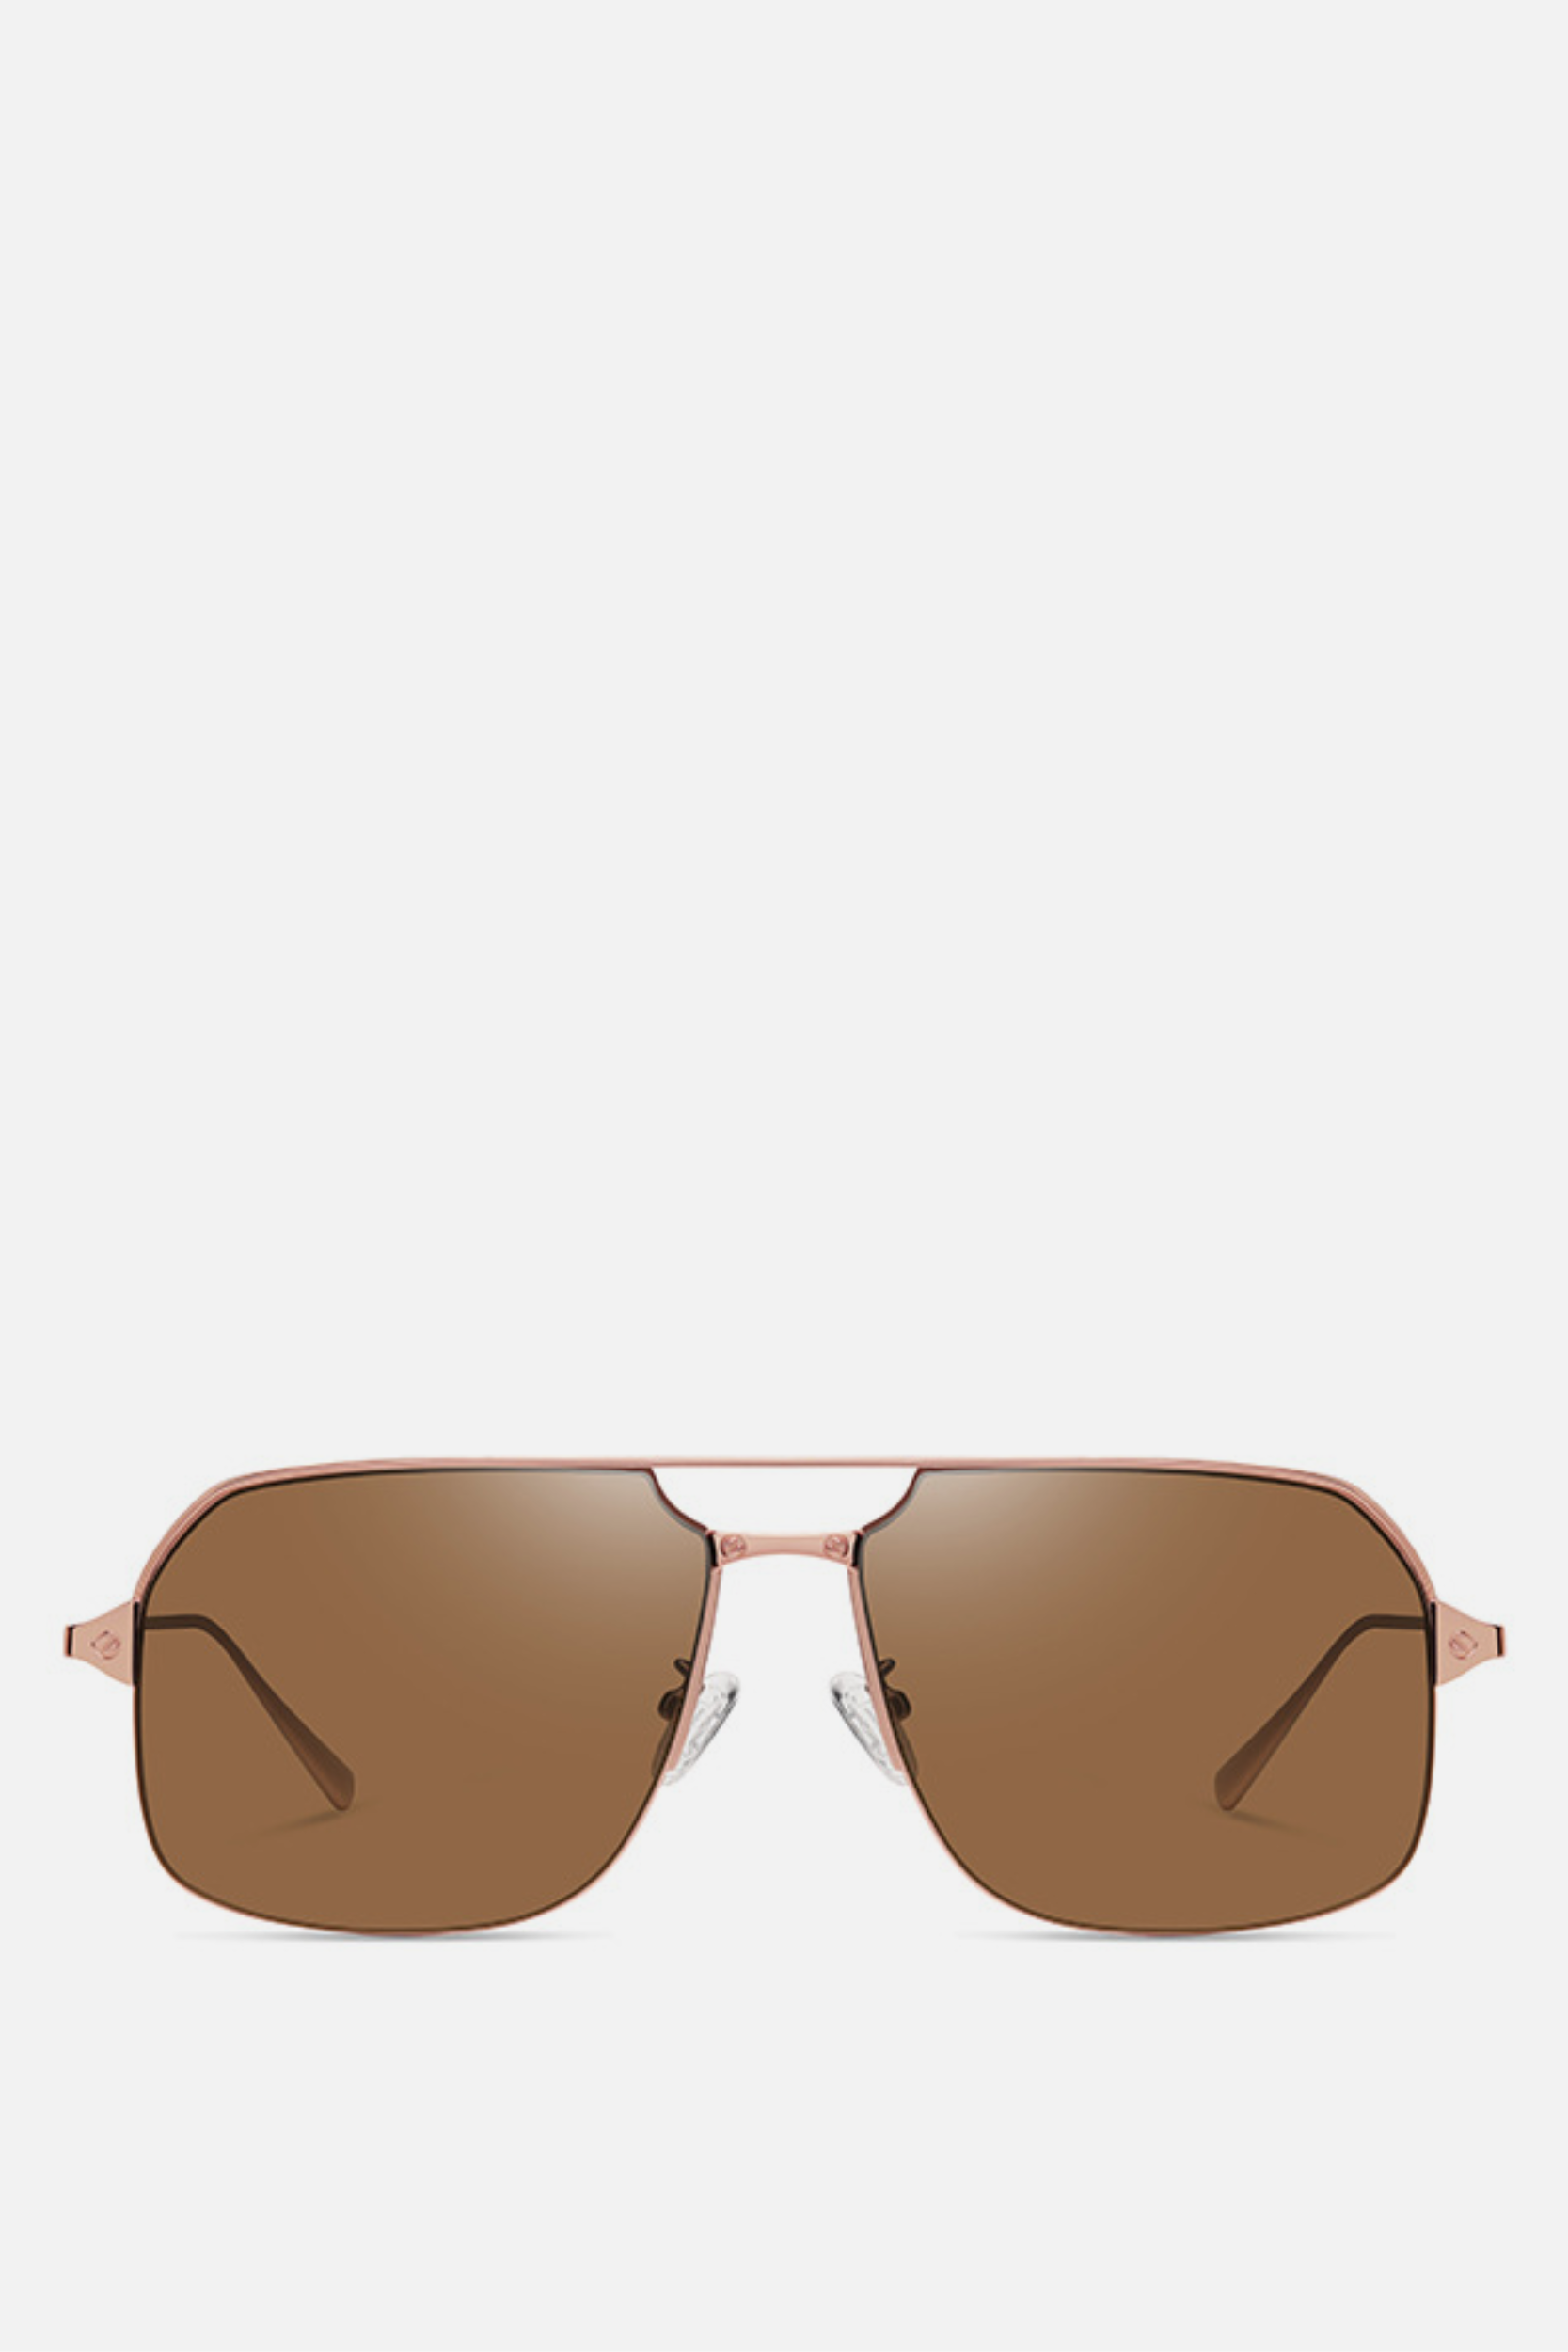 NICE Brown Aviator Sunglasses